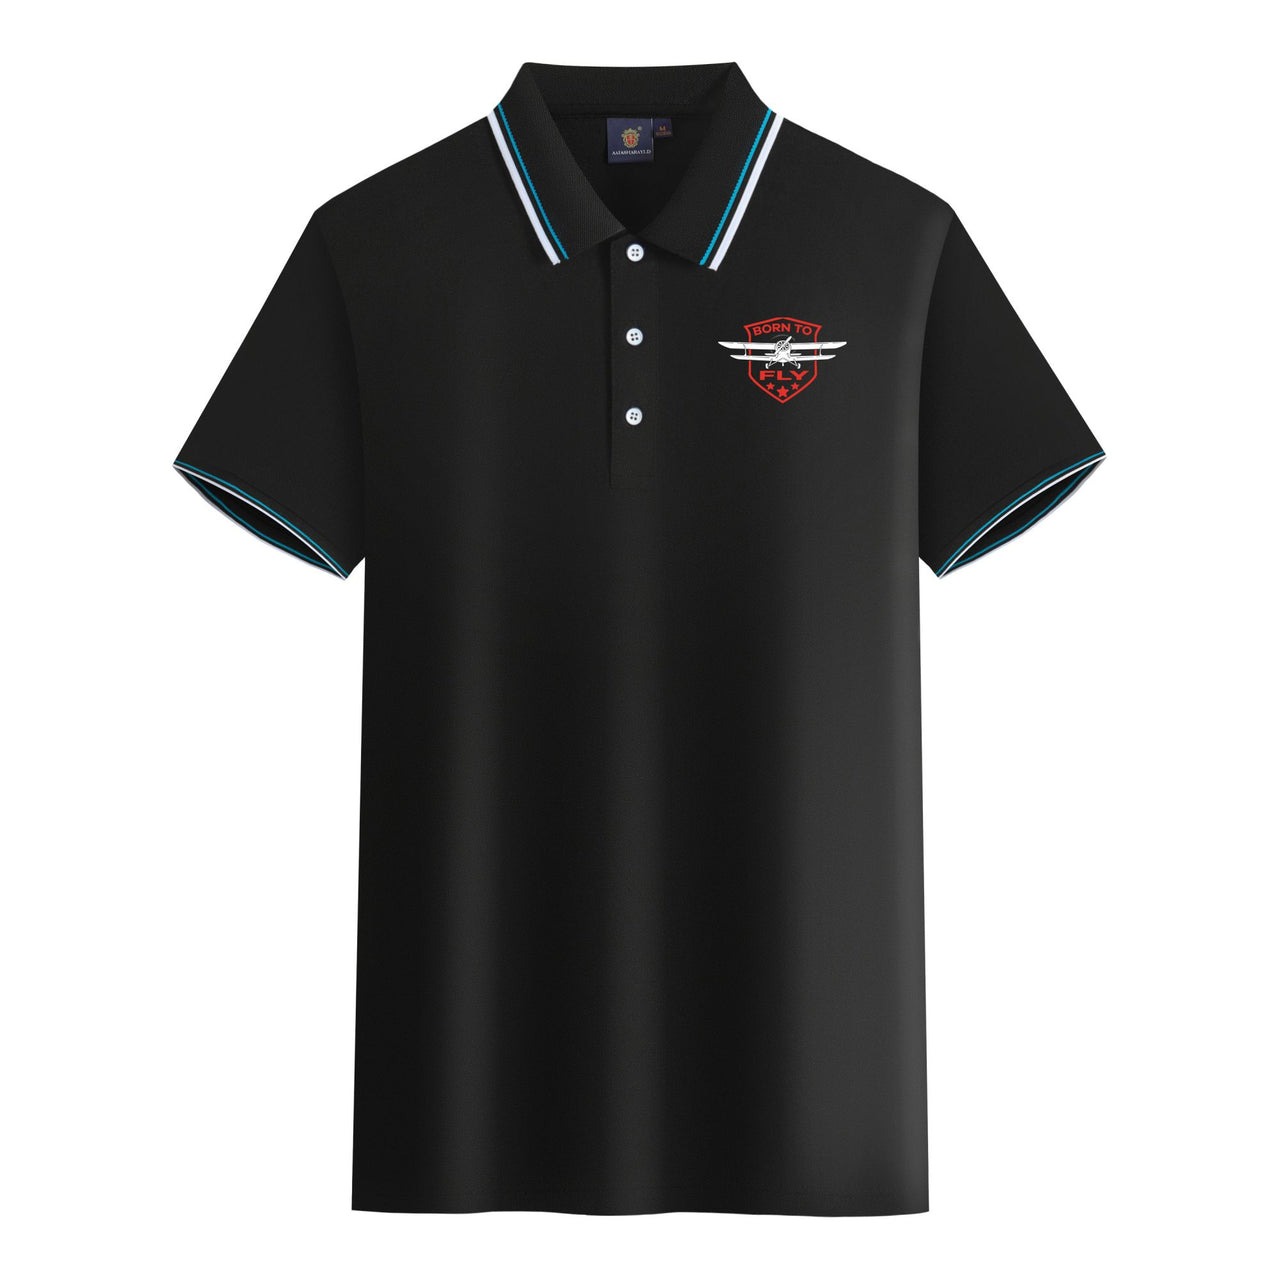 Super Born To Fly Designed Stylish Polo T-Shirts